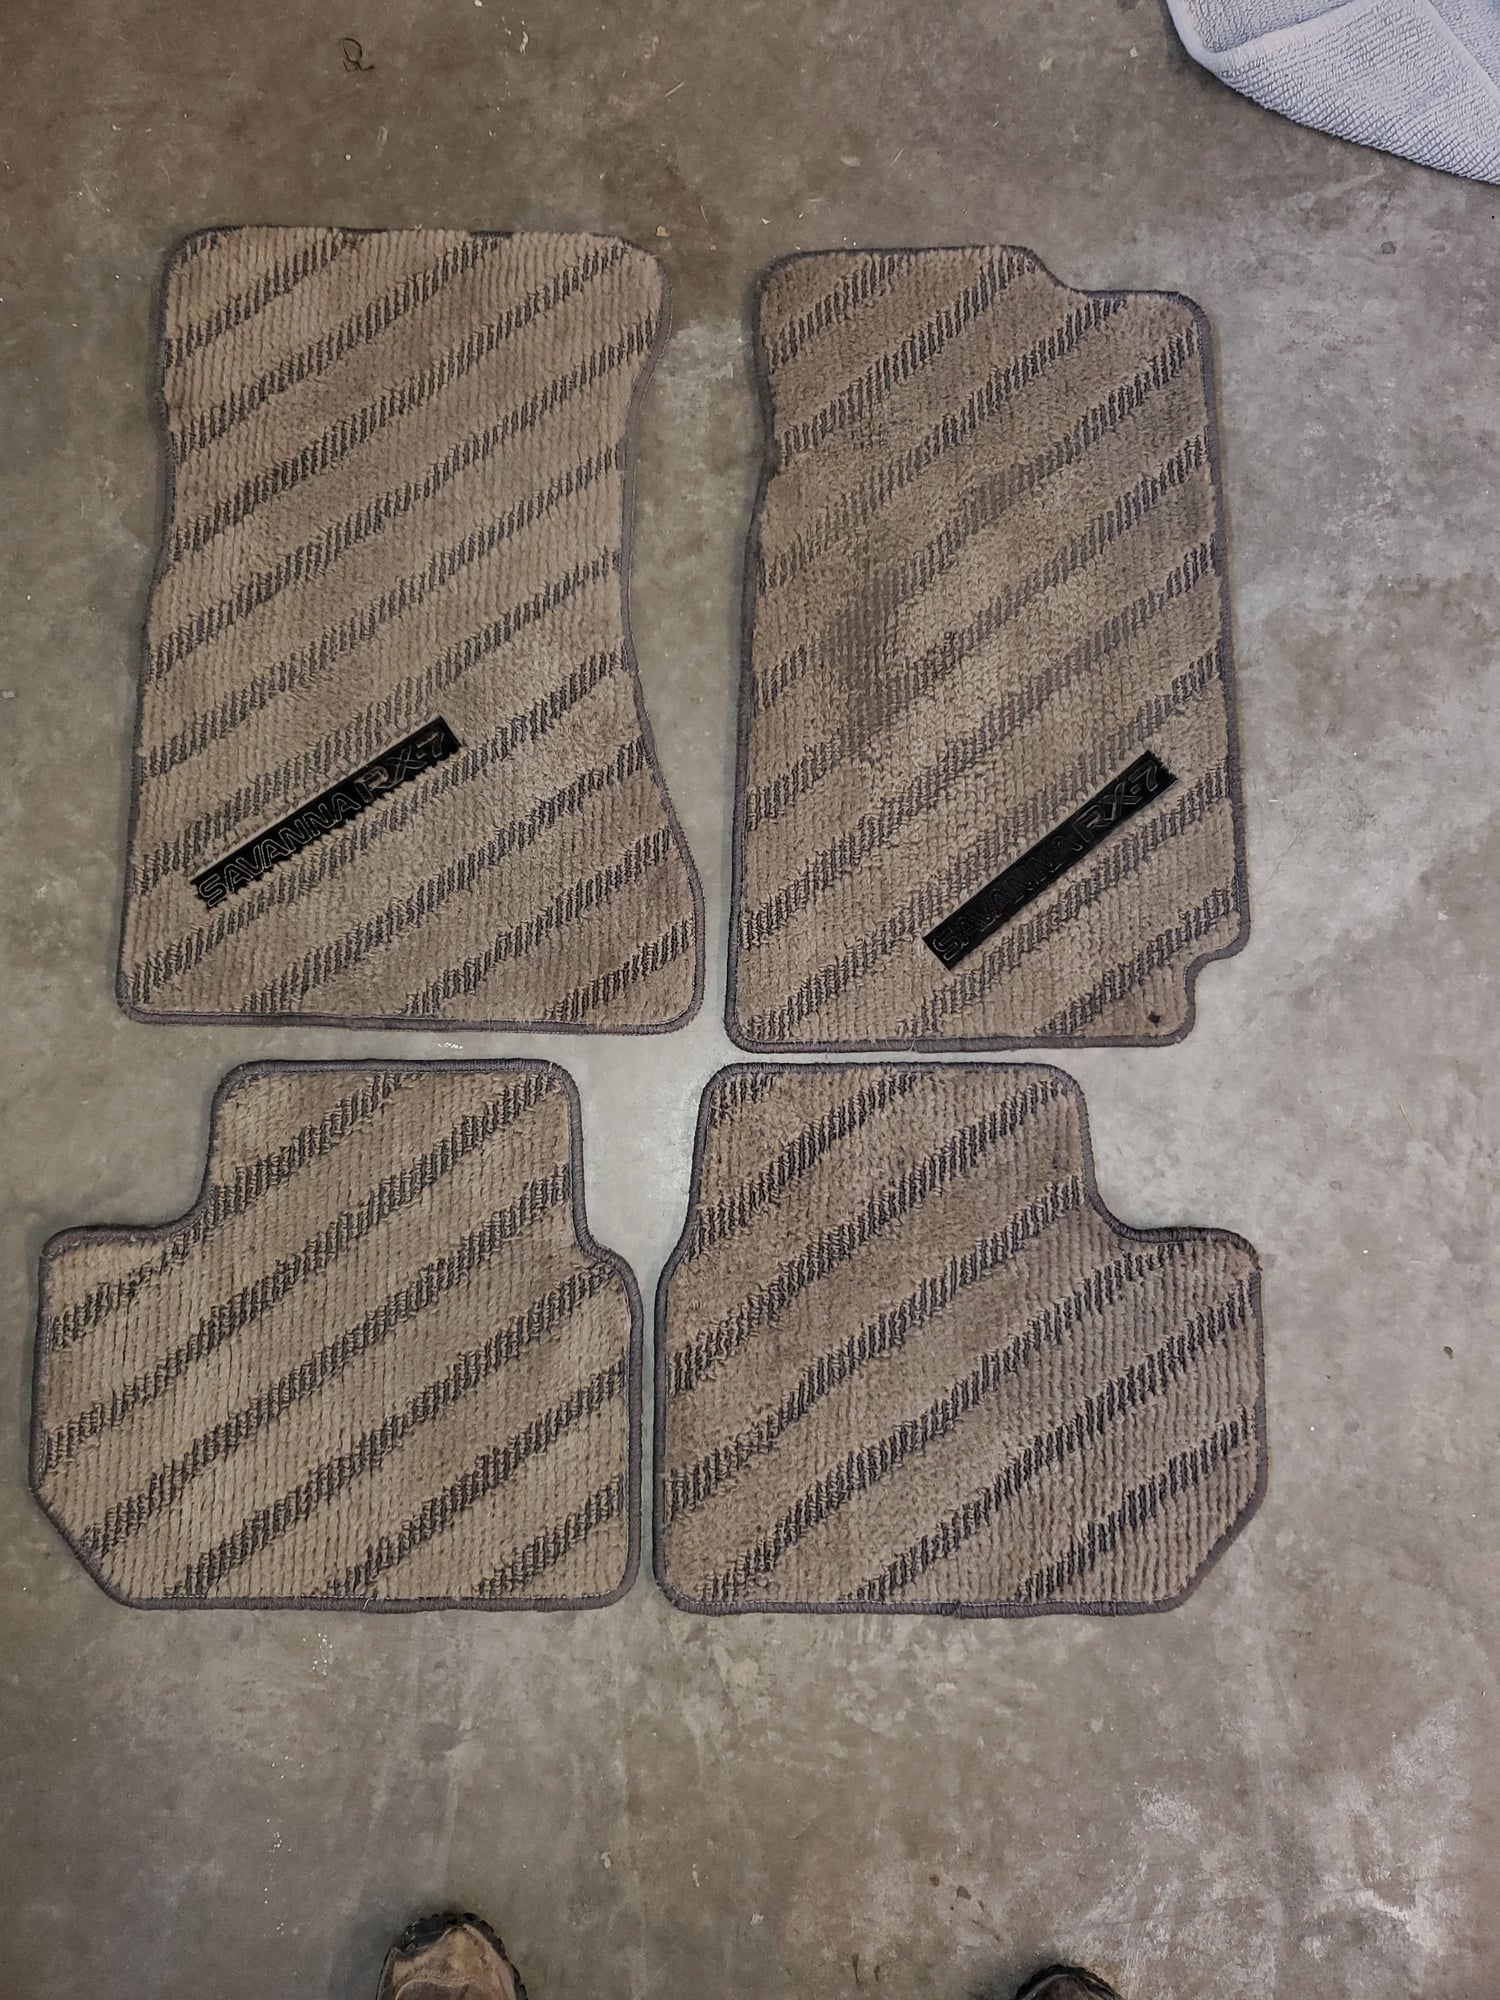 Interior/Upholstery - Fc savanna floor mats - Used - 1986 to 1991 Mazda RX-7 - Kamloops, BC V2E1M4, Canada